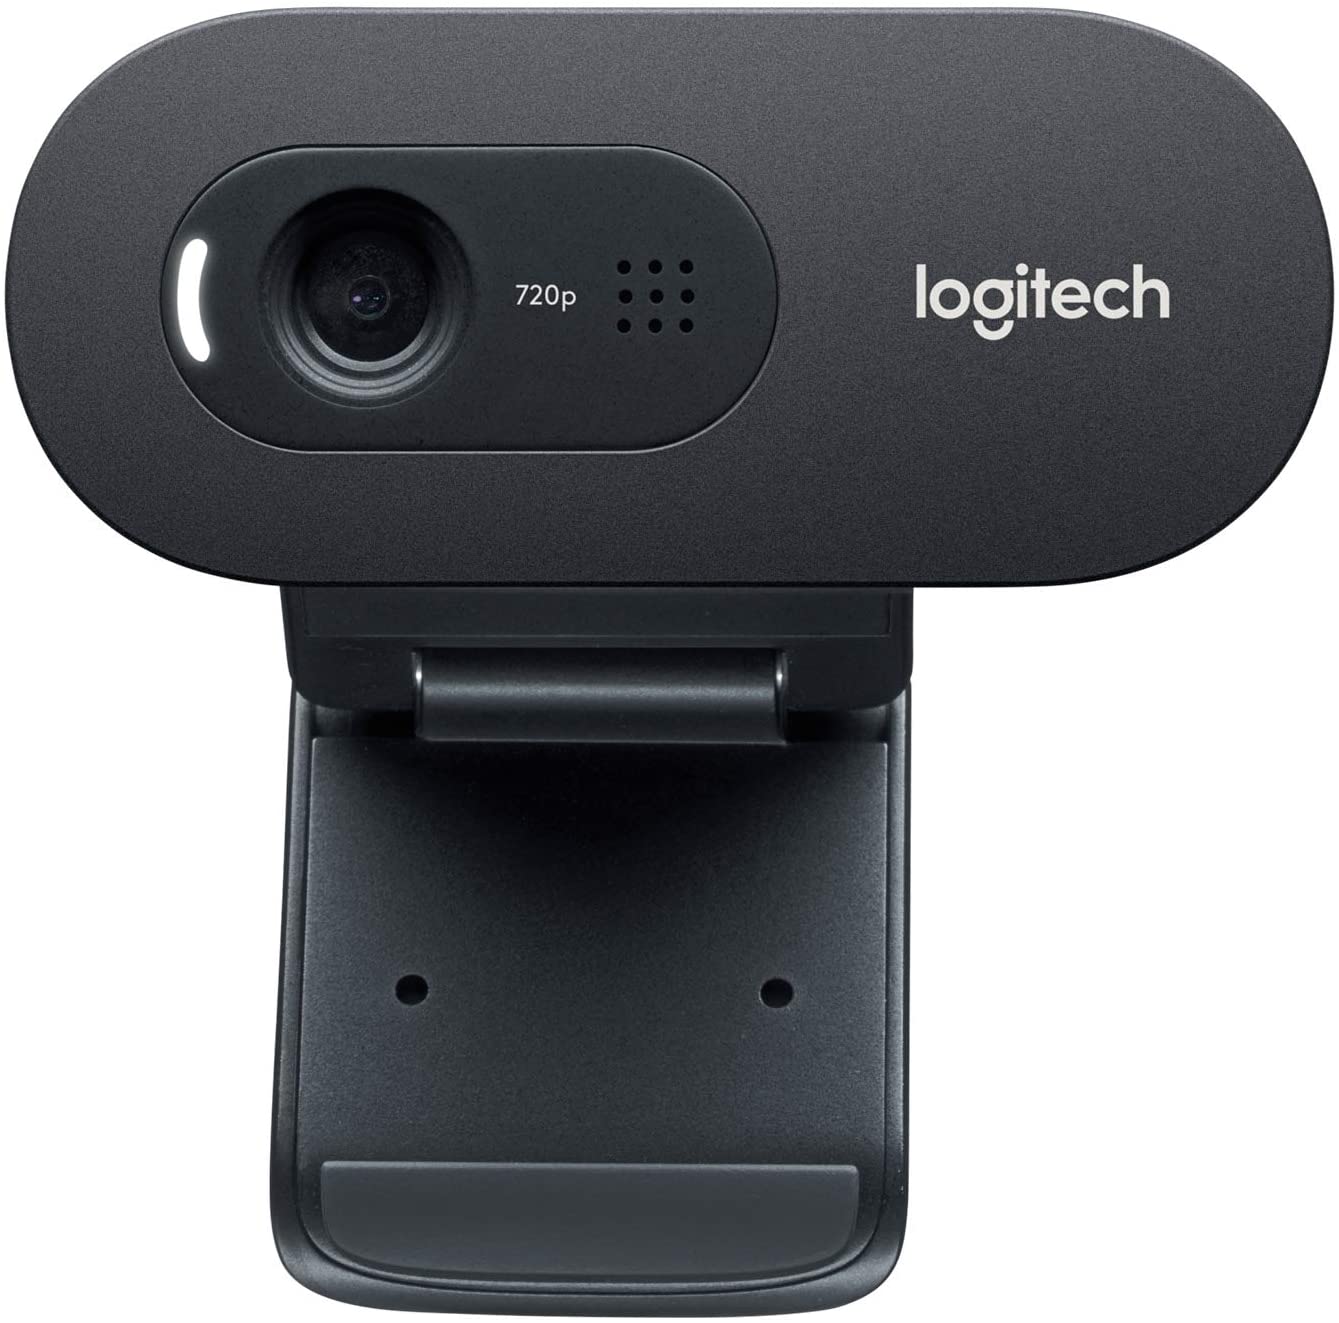 mac driver for logitech webcam